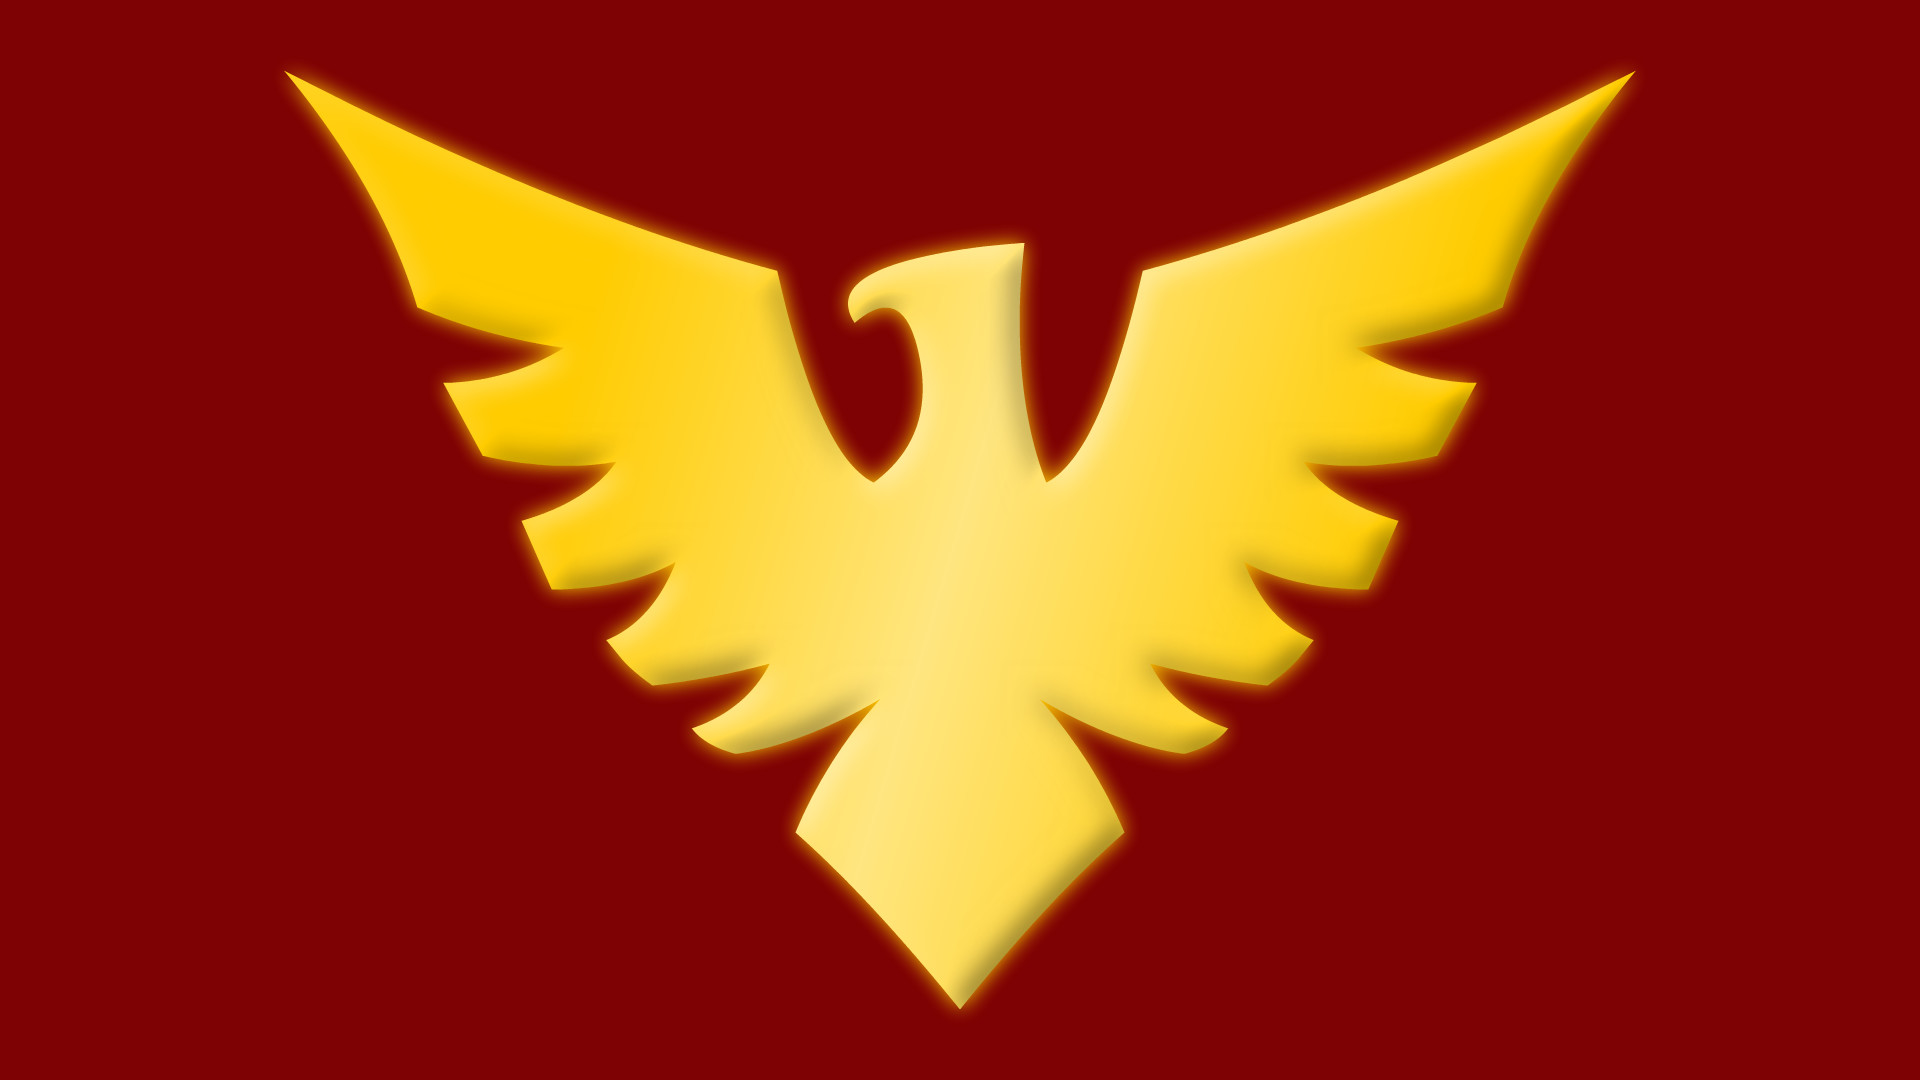 1920x1080 Dark Phoenix Symbol by Yurtigo Dark Phoenix Symbol by Yurtigo